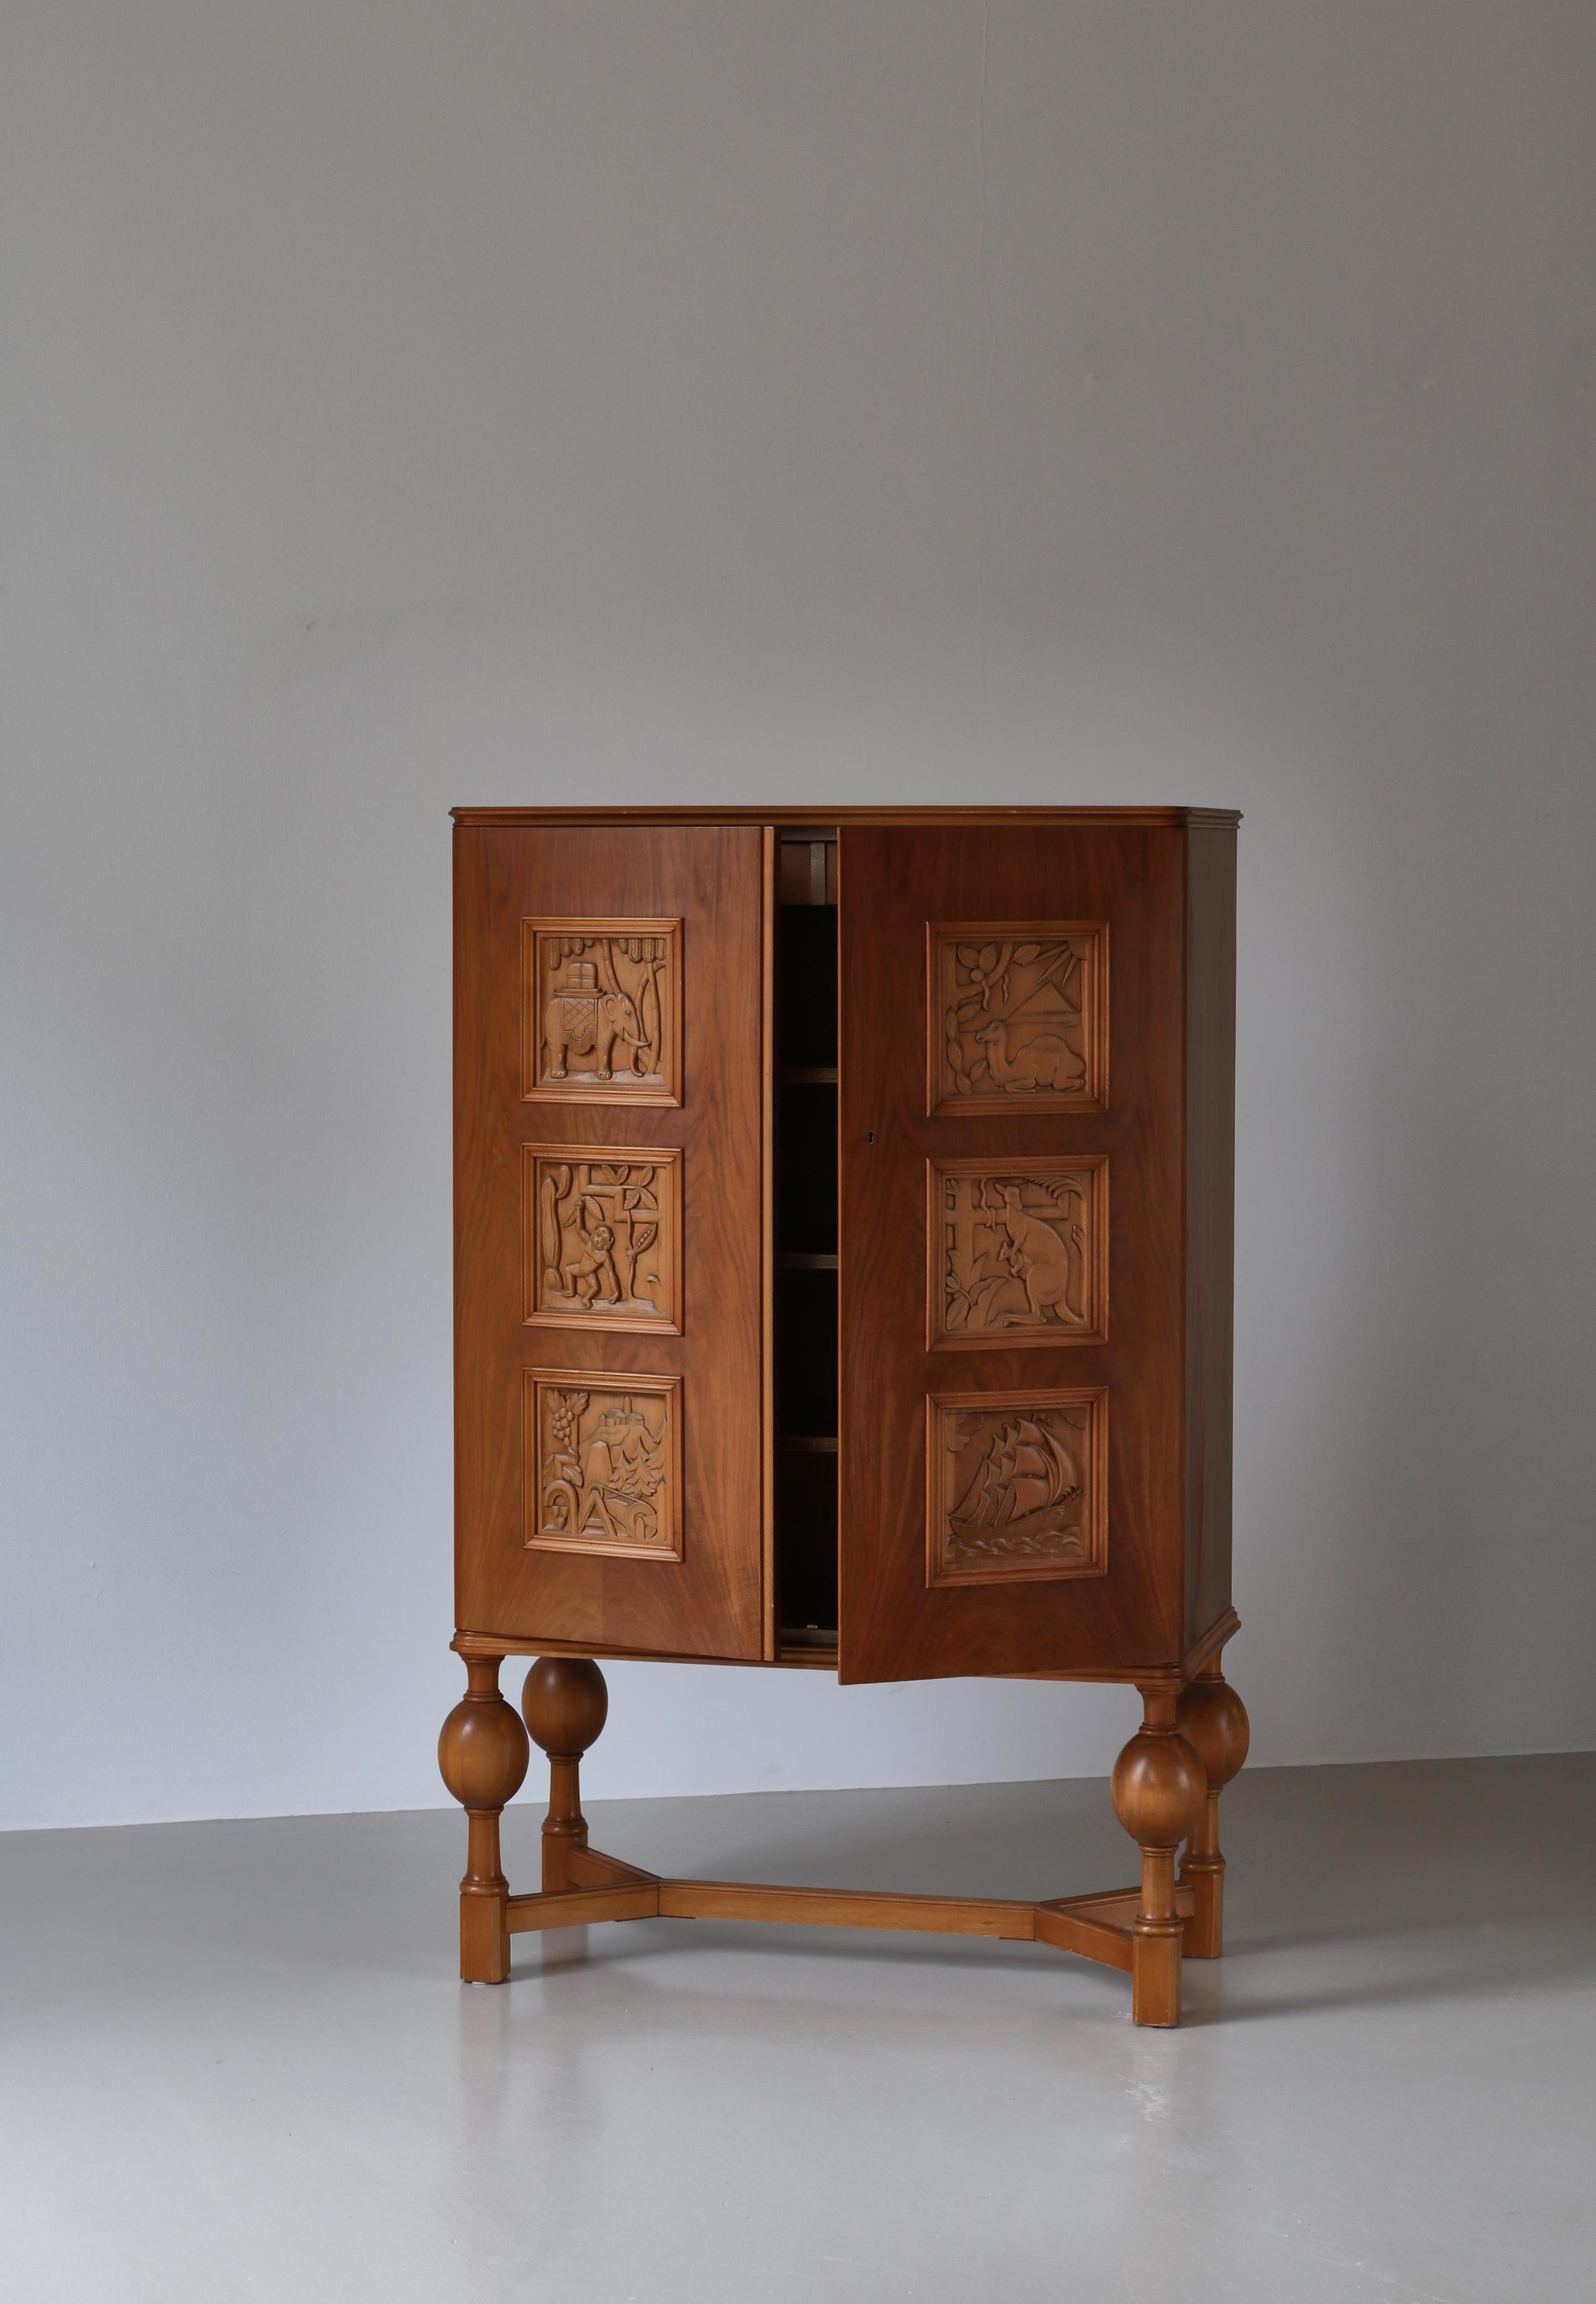 Beech Swedish Grace Cabinet with Carved Decor by Eugen Höglund, Vetlanda, Sweden, 1930 For Sale